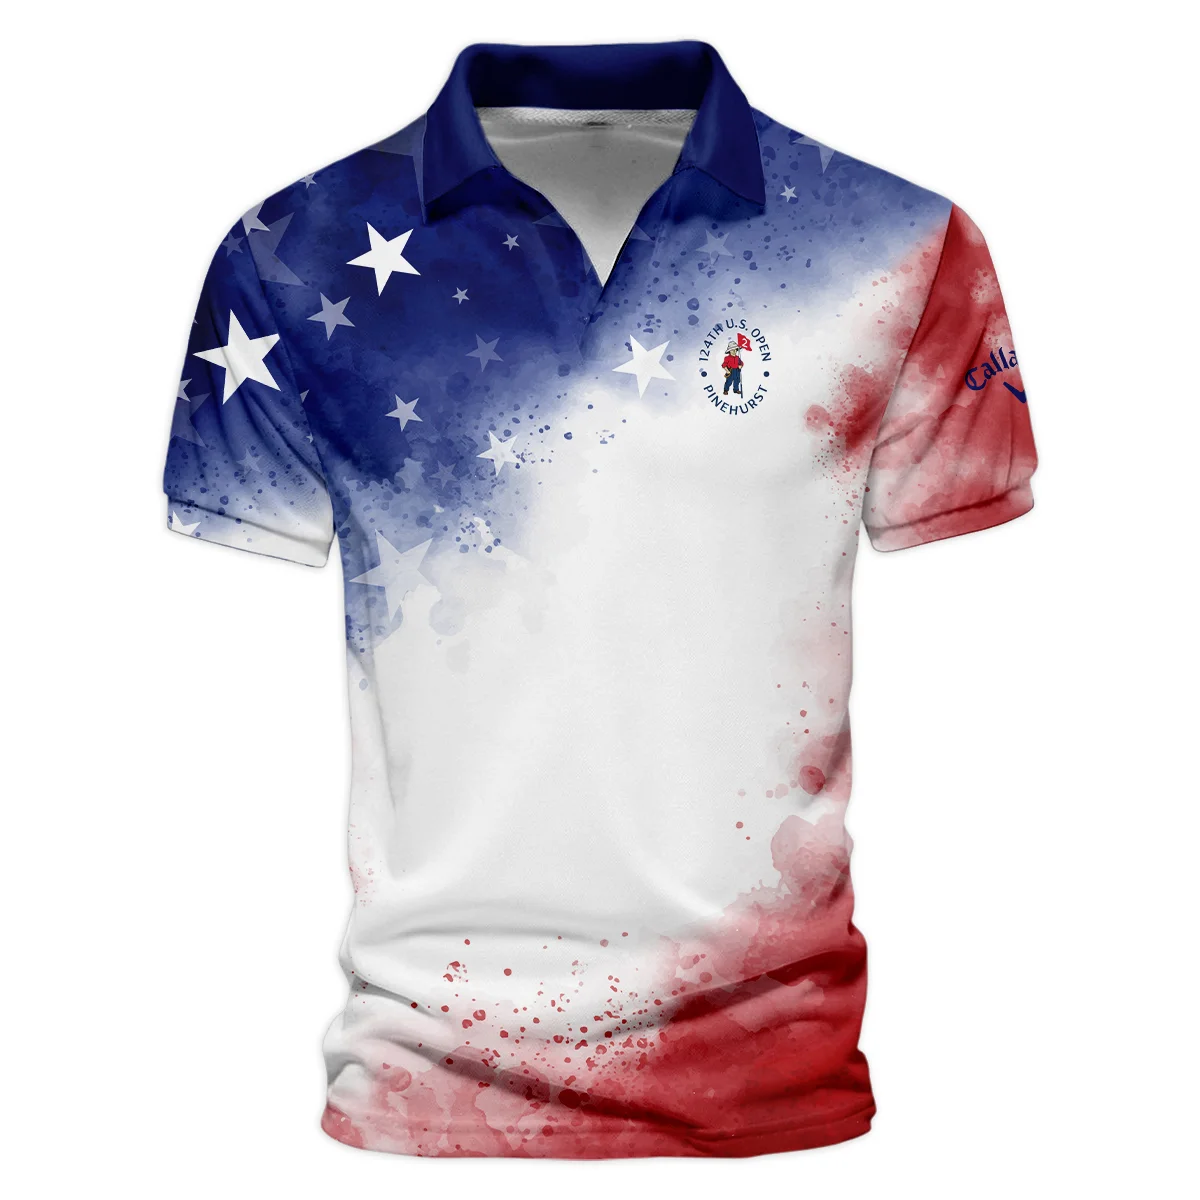 124th U.S. Open Pinehurst Callaway Blue Red Watercolor Star White Backgound Polo Shirt Mandarin Collar Polo Shirt